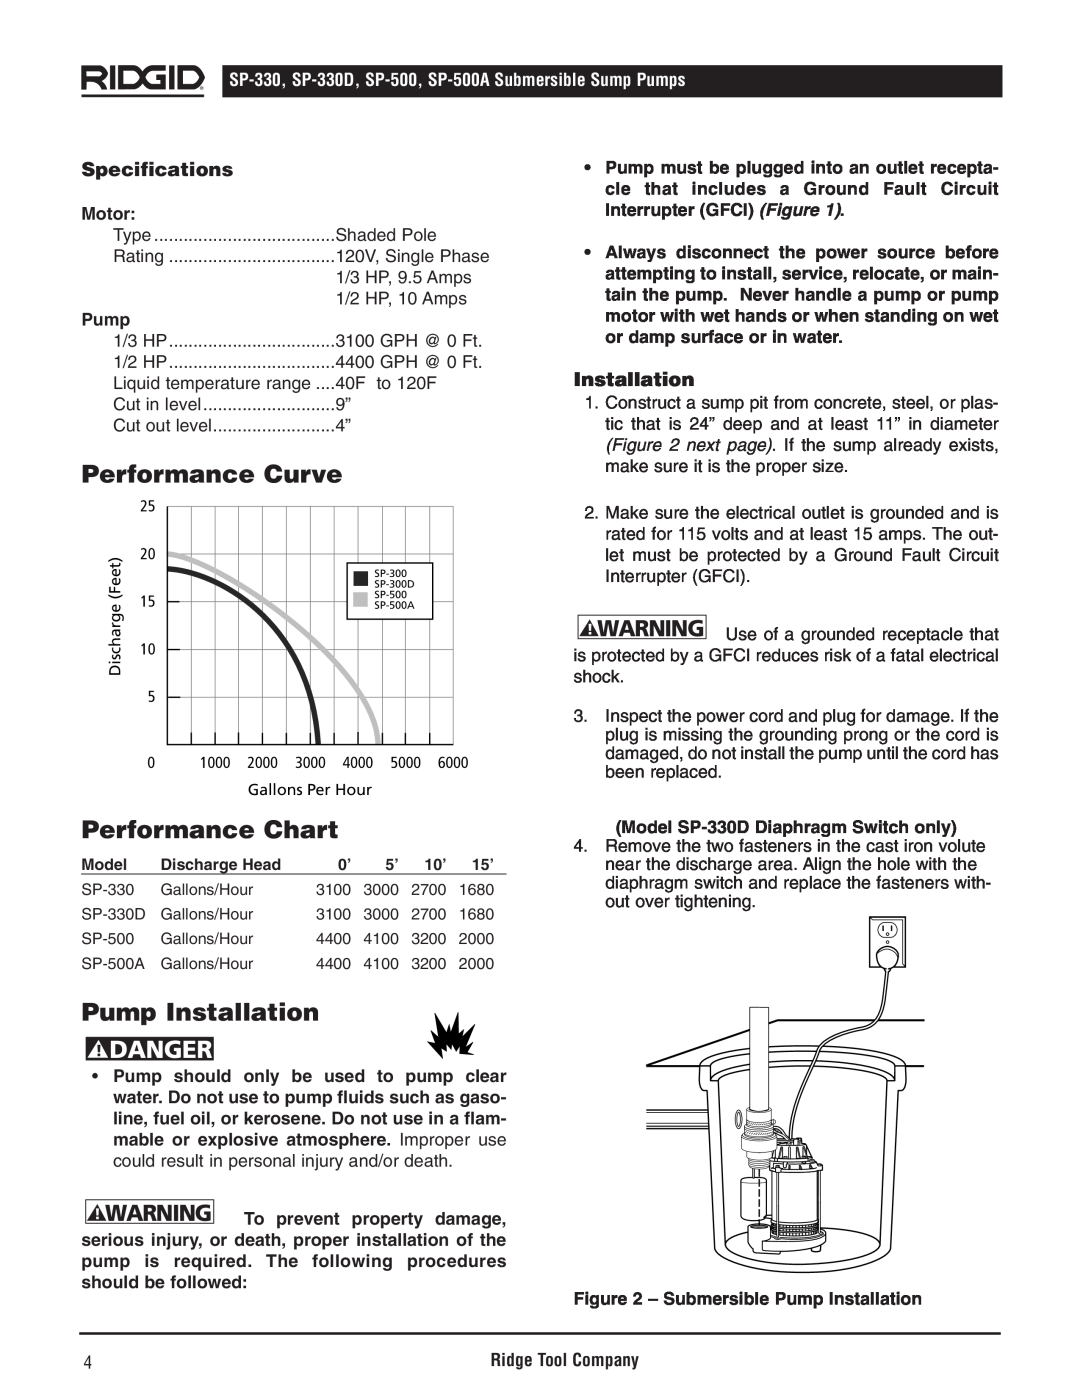 RIDGID SP-330D Performance Curve, Performance Chart, Pump Installation, Specifications, Motor, Danger, Ridge Tool Company 